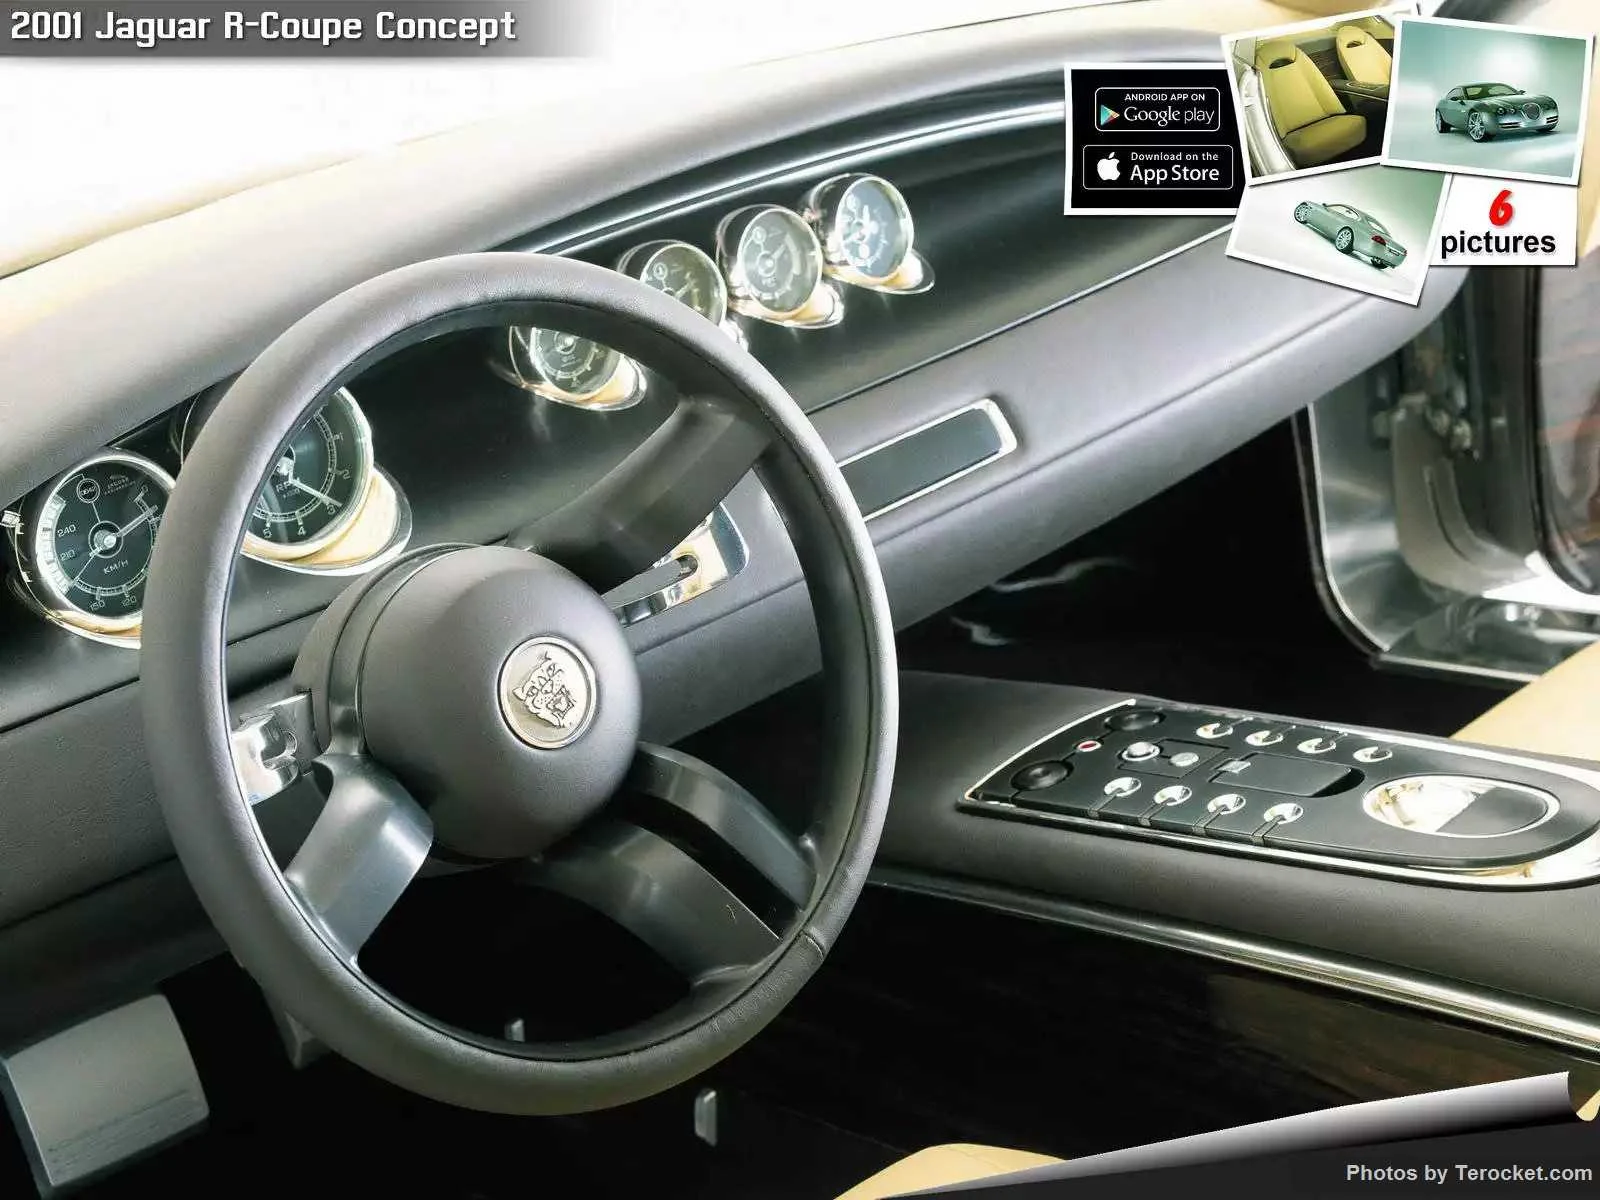 Hình ảnh xe ô tô Jaguar R-Coupe Concept 2001 & nội ngoại thất